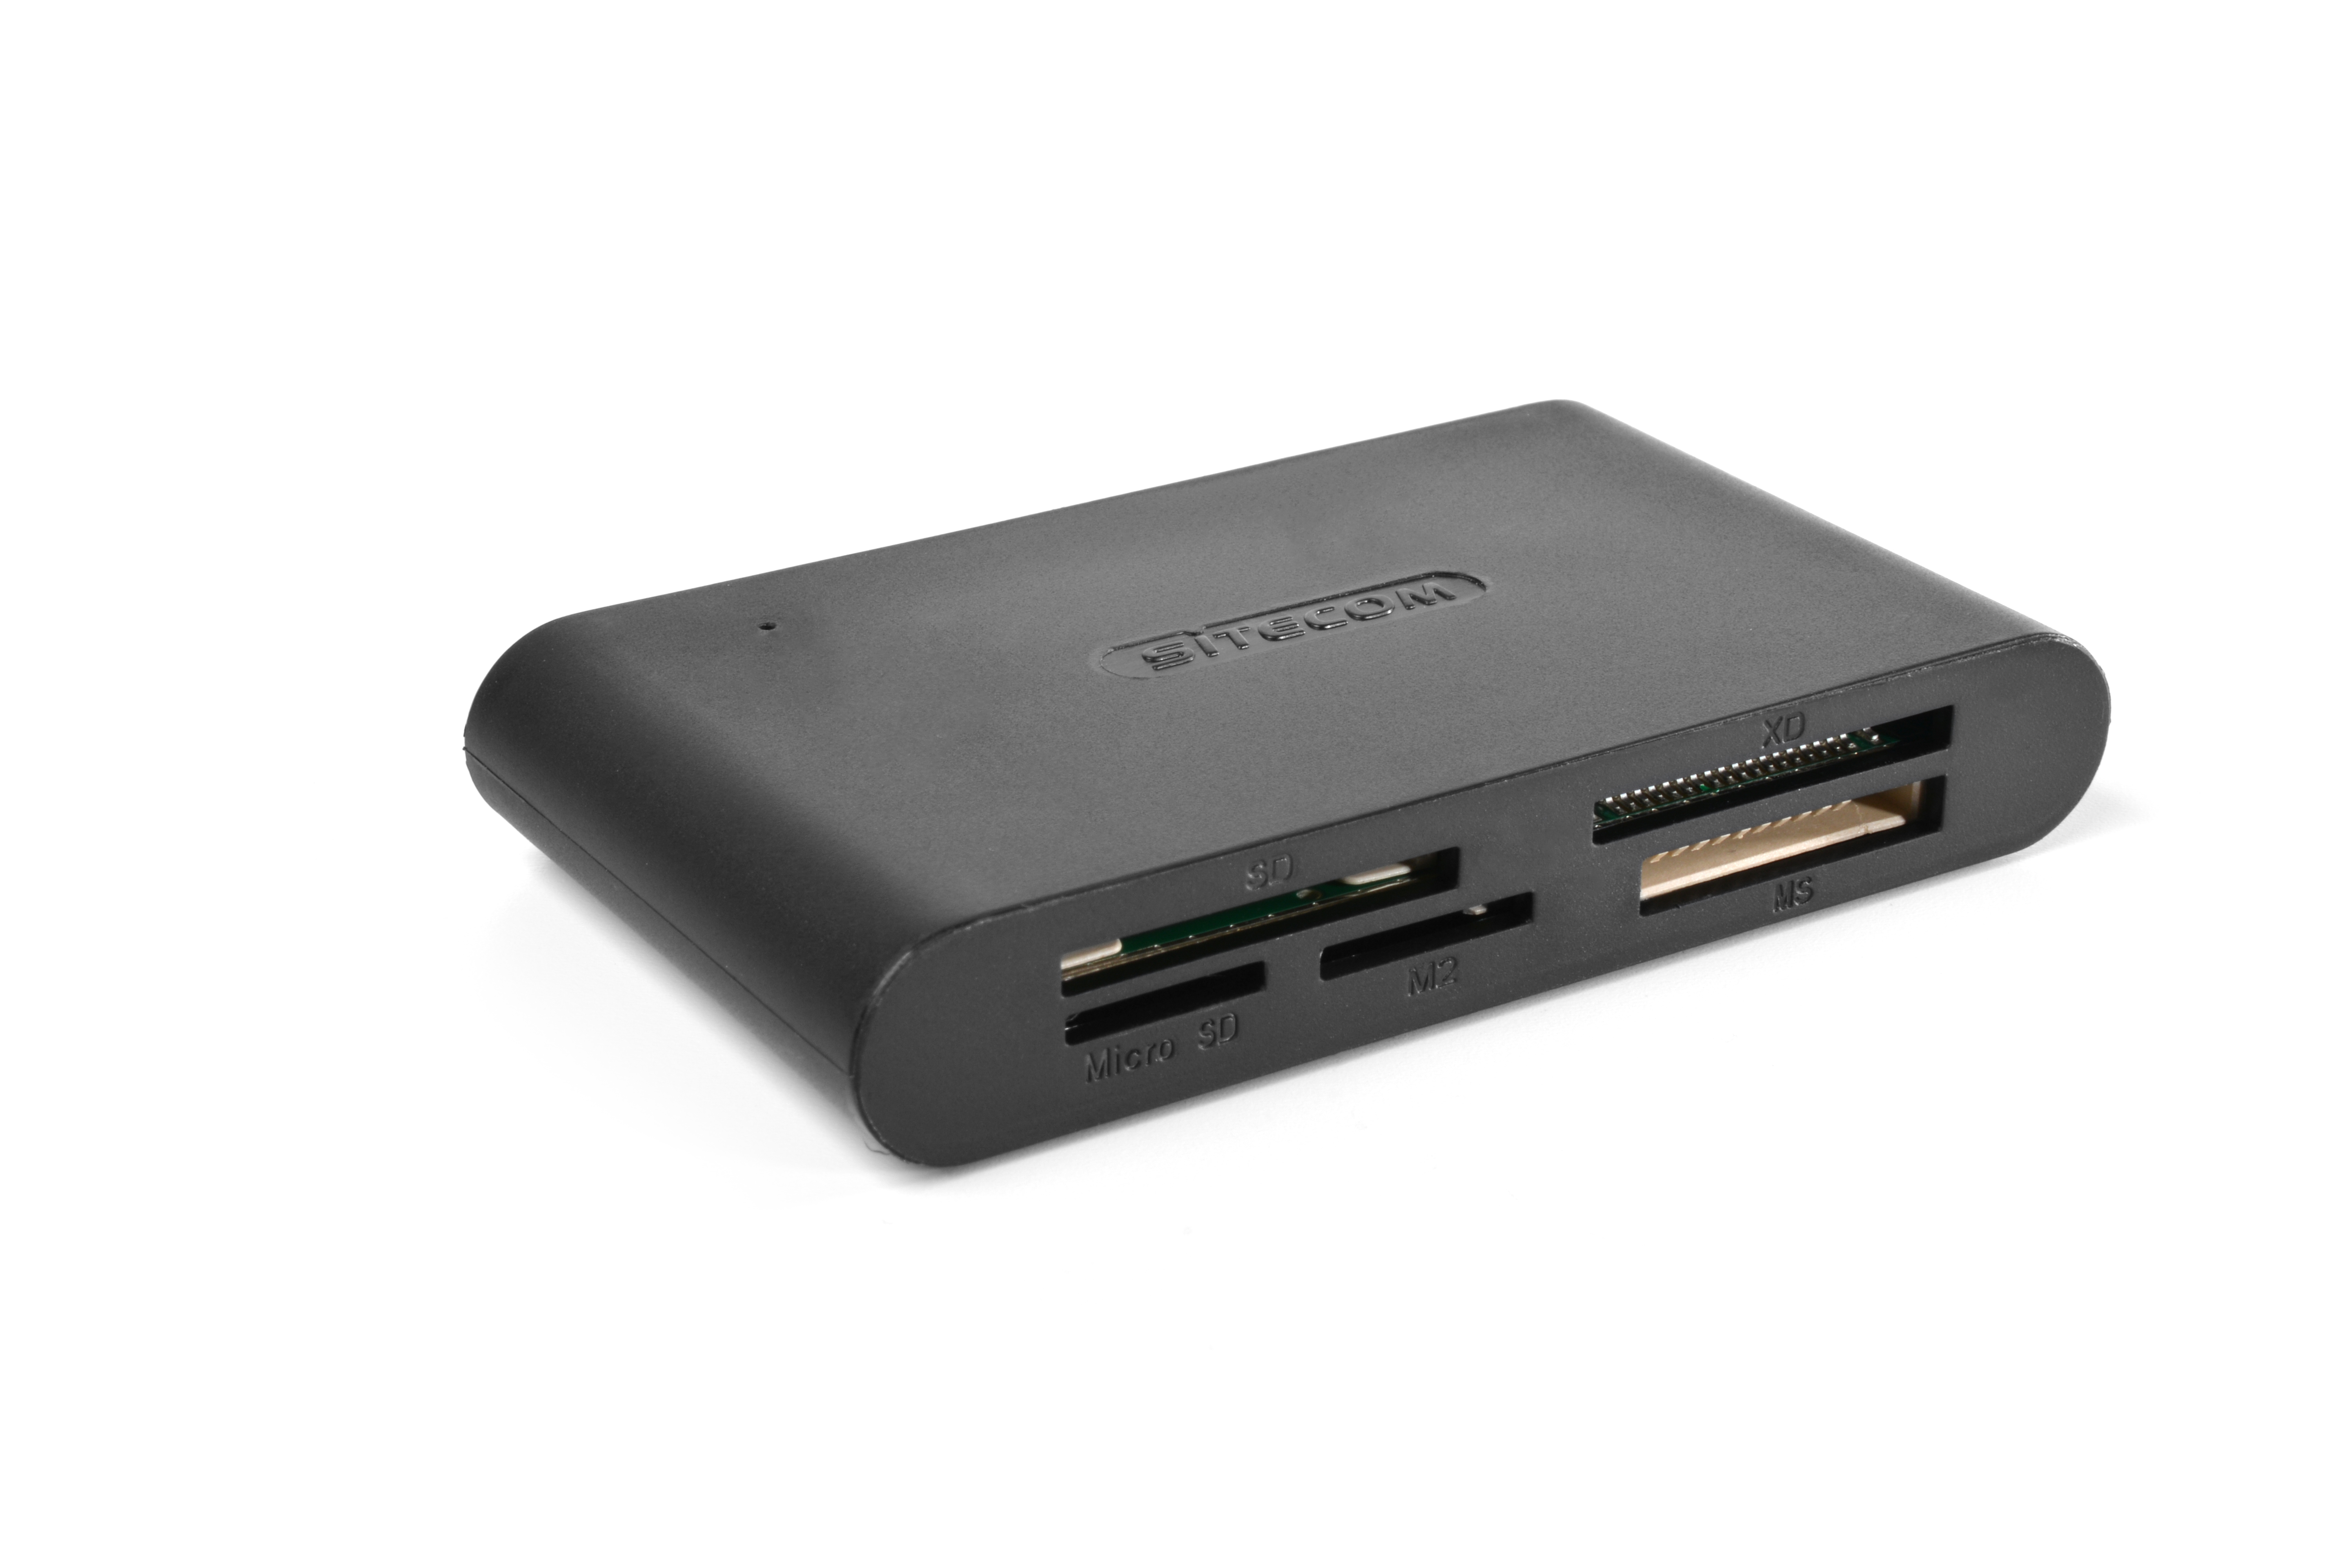 Sitecom MD-061 USB 3.0 Memory Card Reader